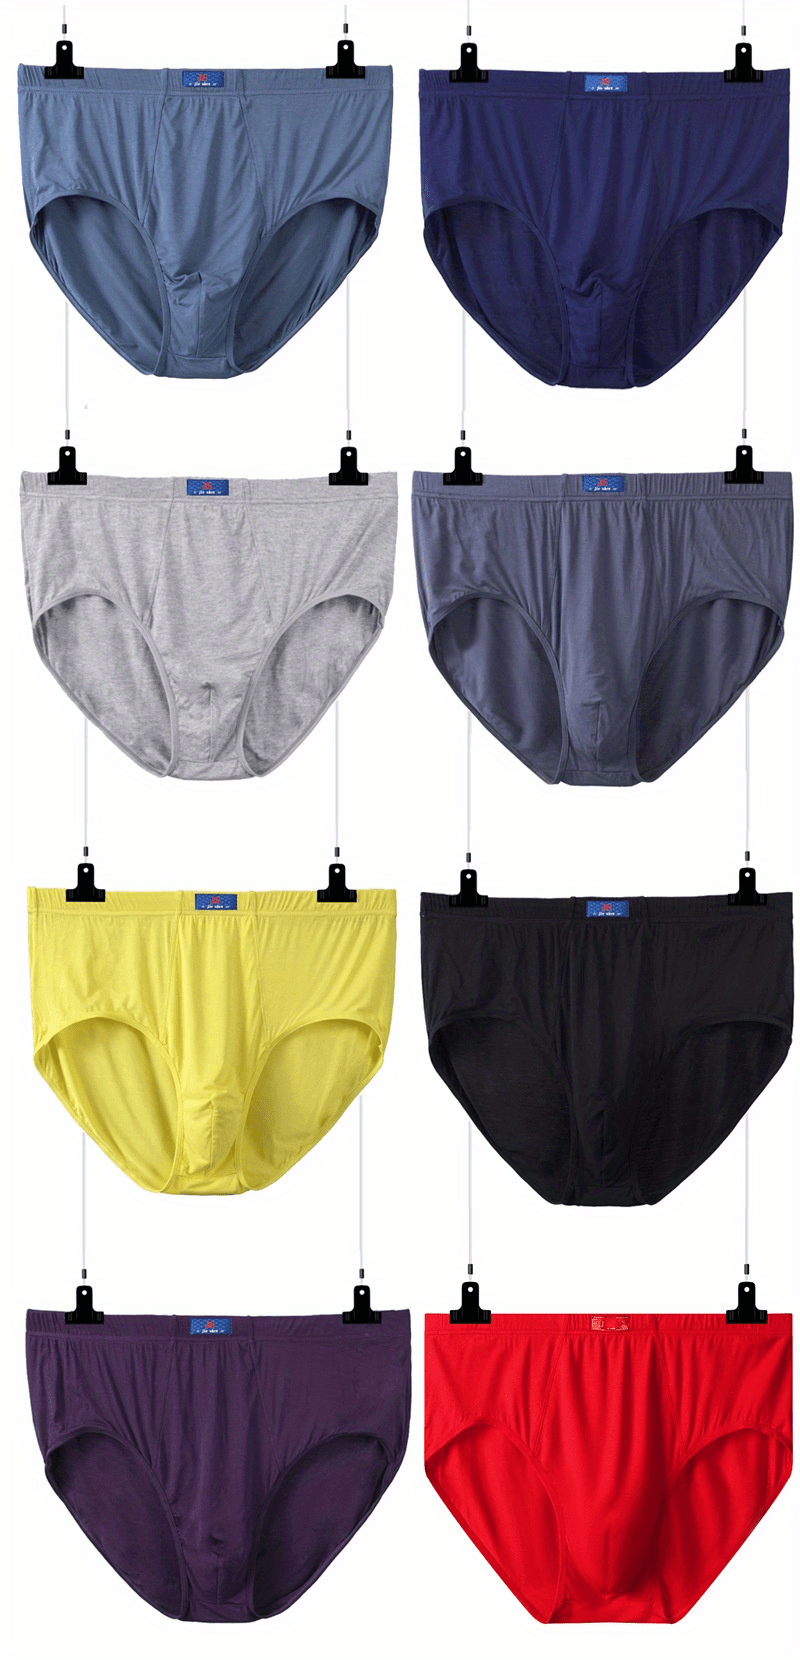 Women Middle-aged Cotton Panties Underwear Comfortable High Waist